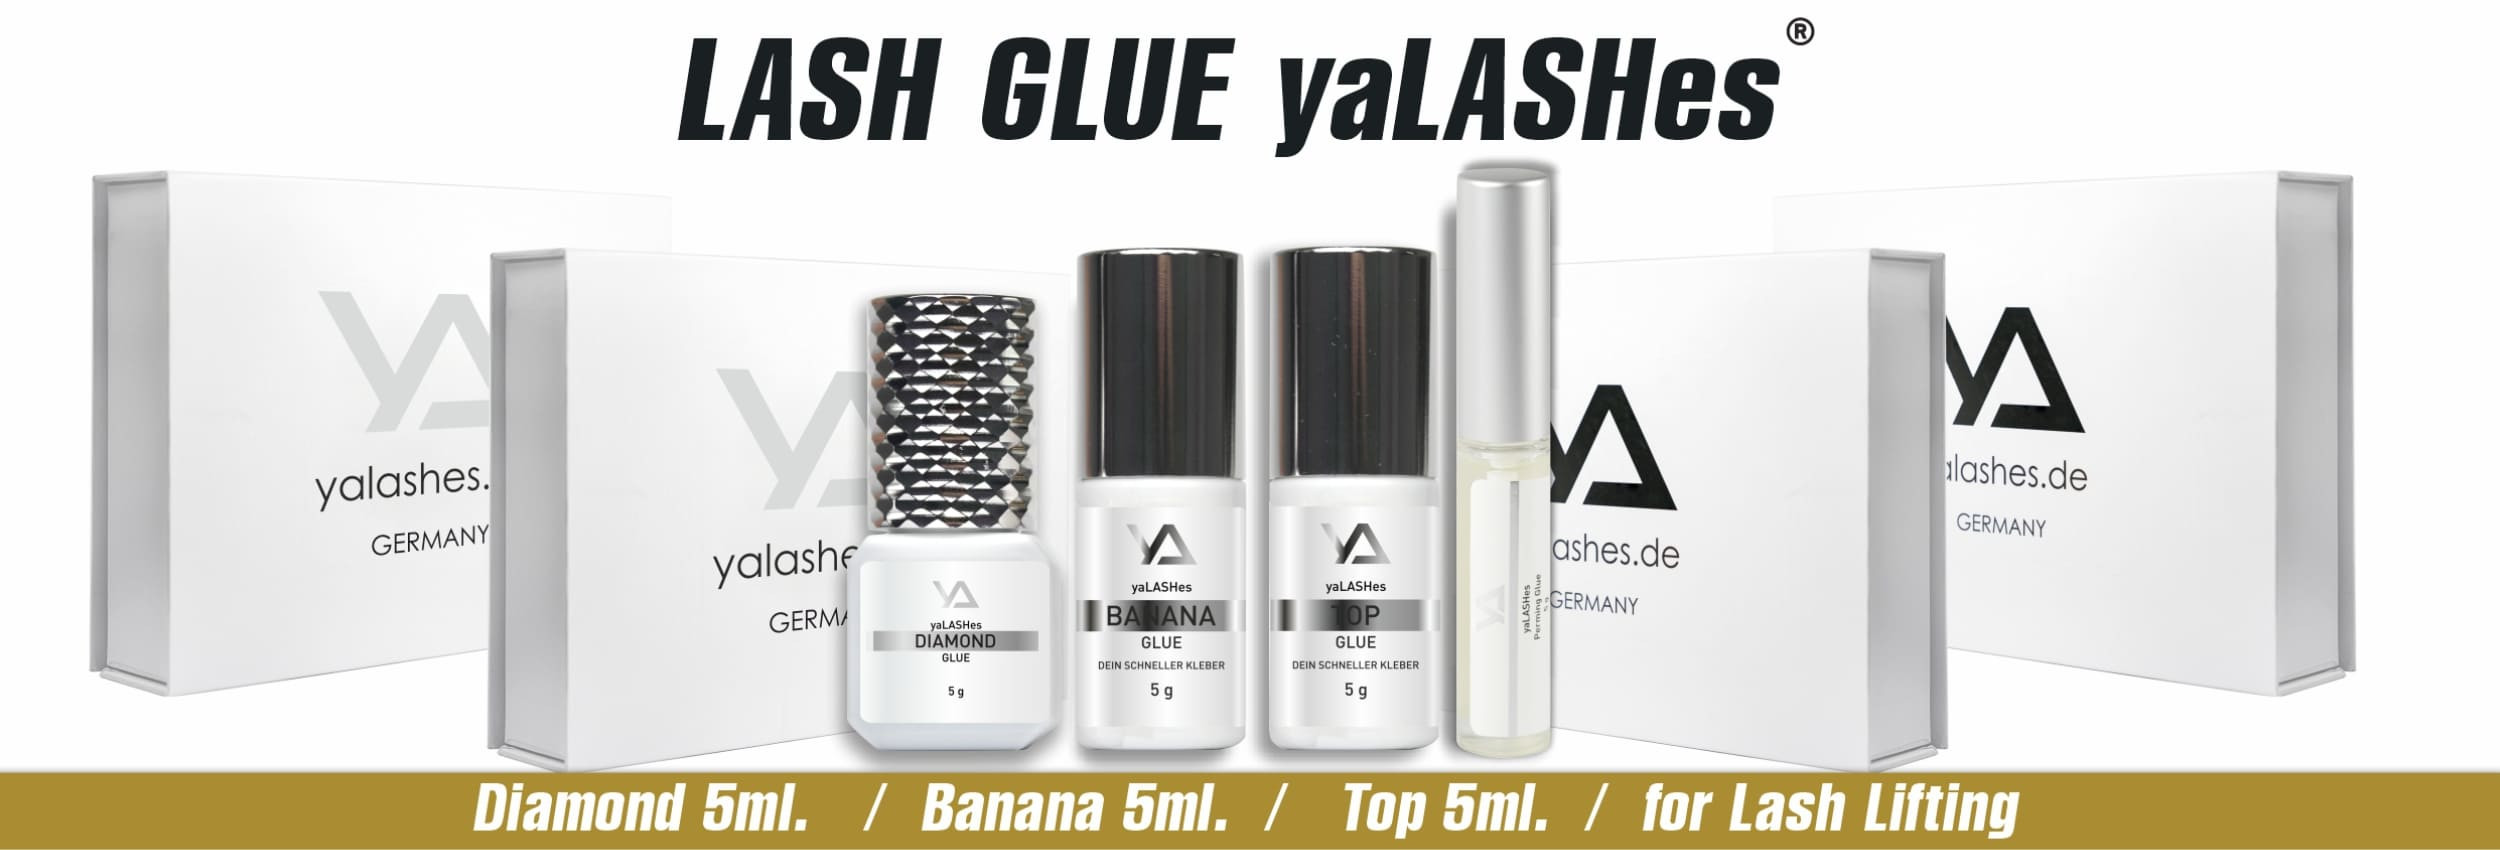 Adhesive for eyelash extensions yaLASHes, Beautier, Lovely